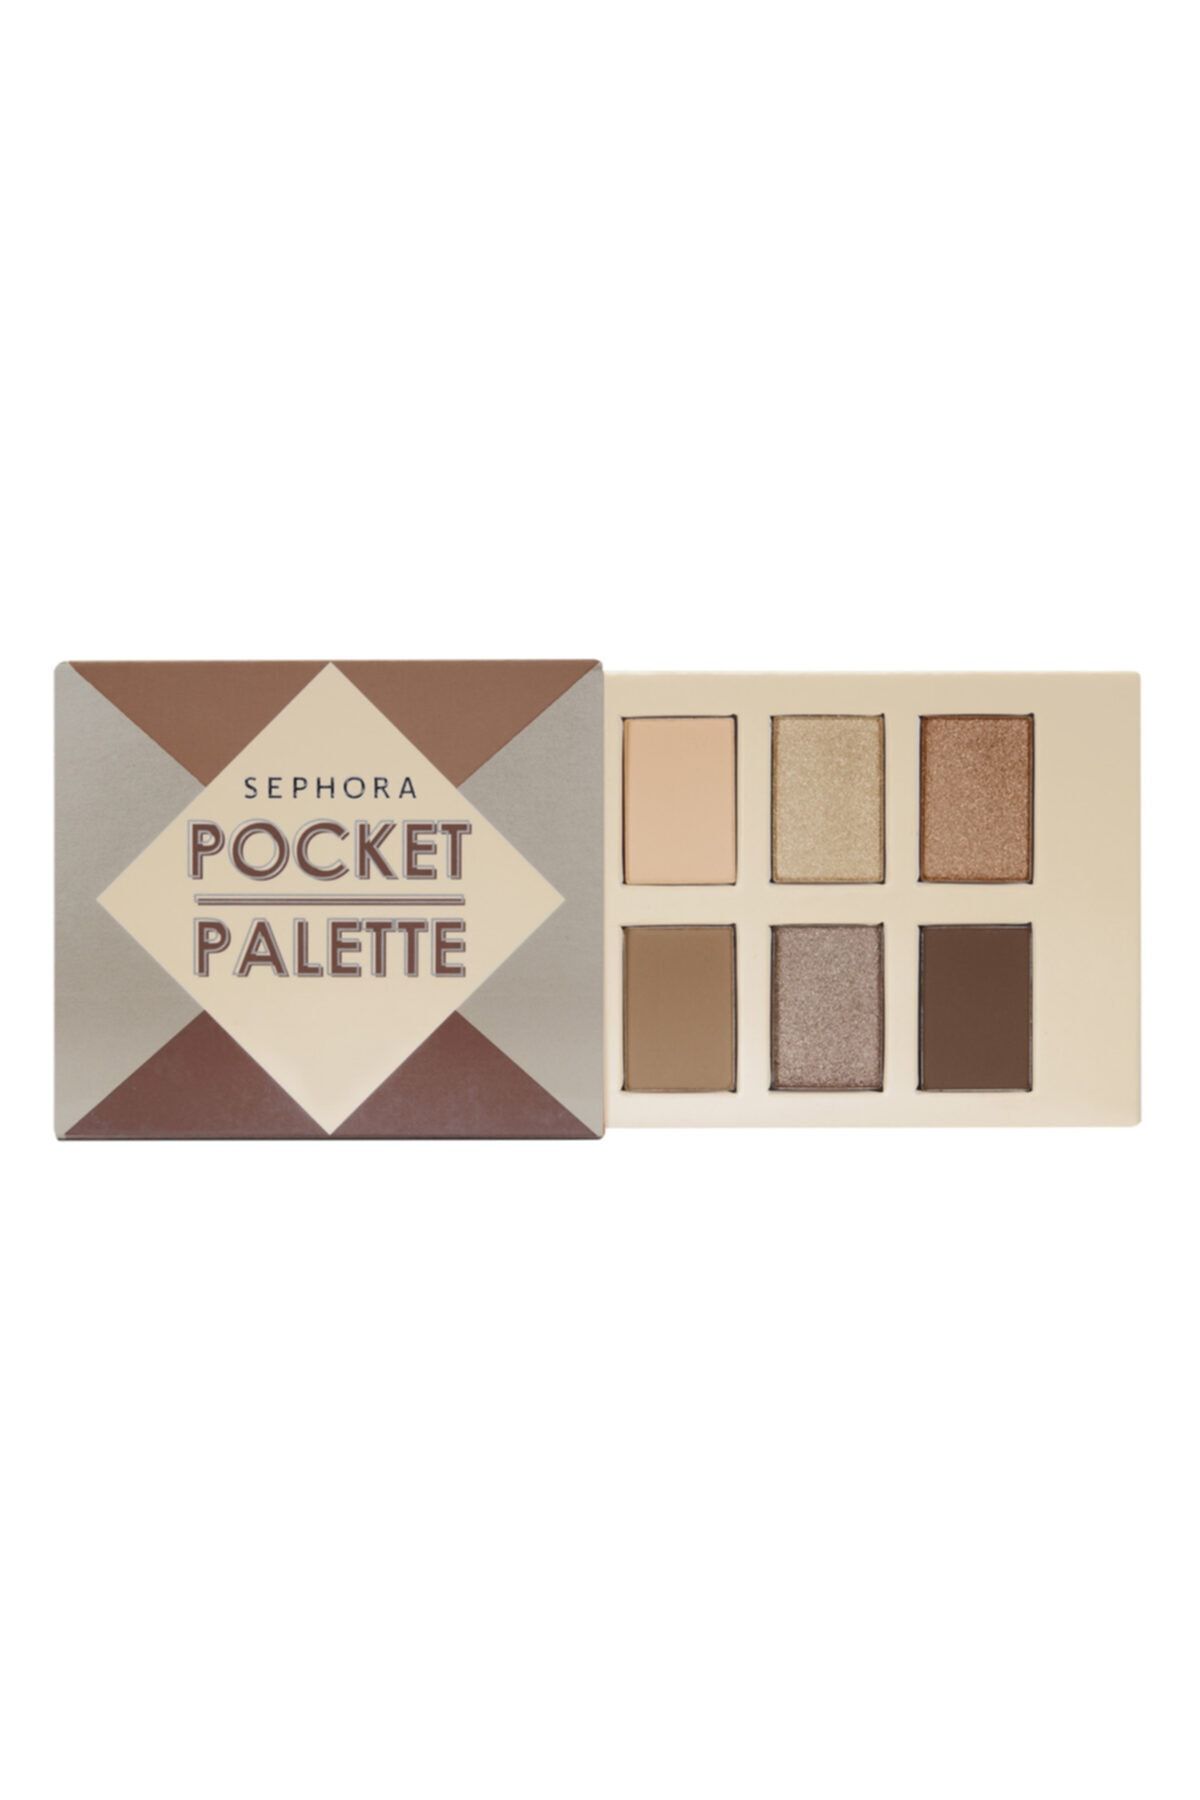 Sephora Pocket Palette Tons Bruns Froids